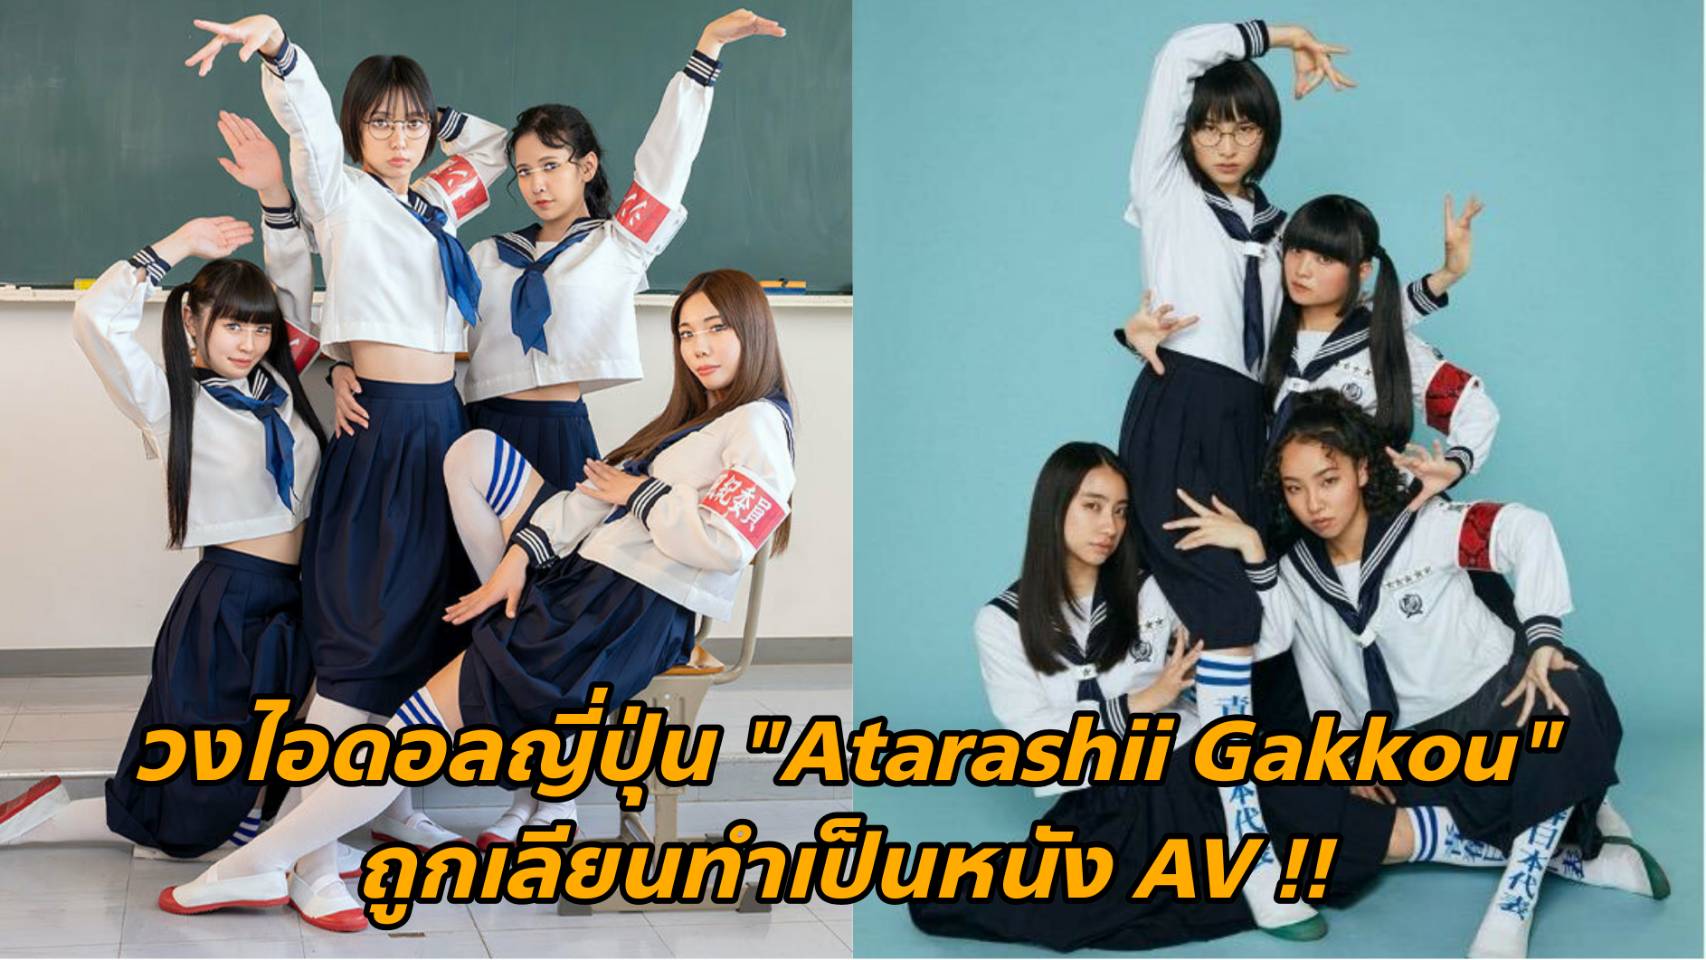 [HUNTC-006] วงไอดอลญี่ปุ่น "Atarashii Gakkou" ถูกเลียนทำเป็นหนัง AV 24